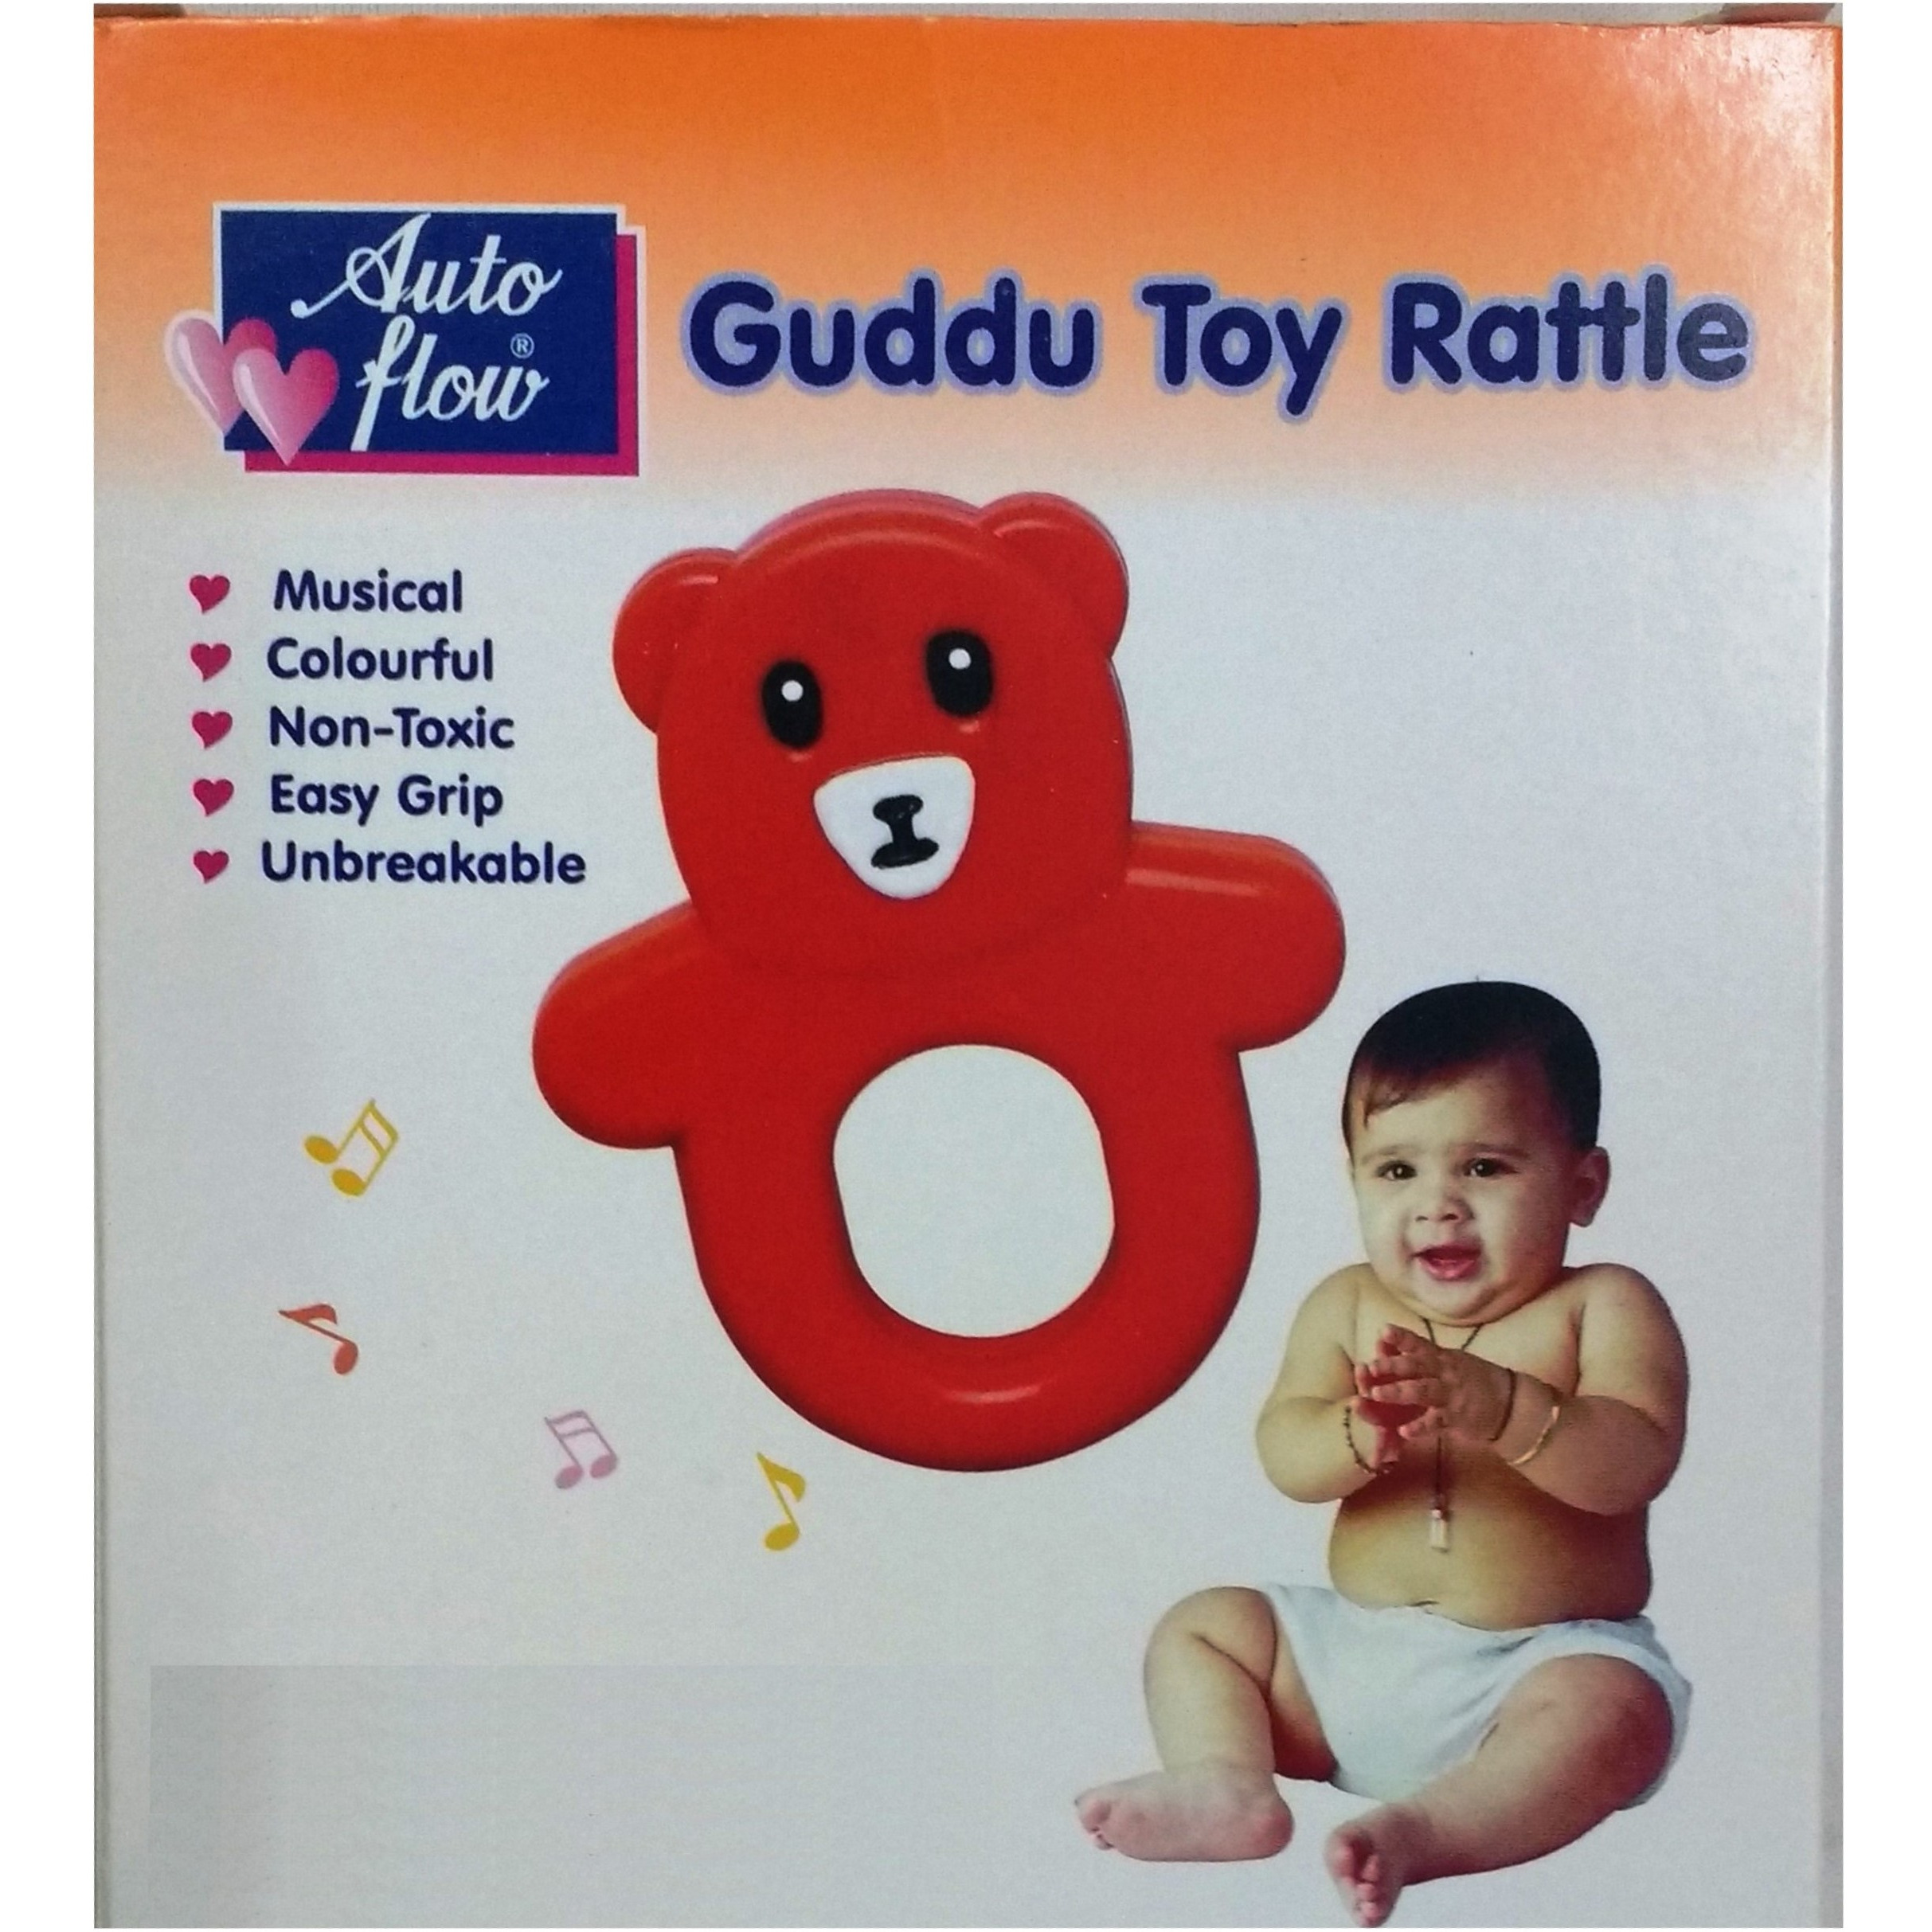 Auto Flow Rattle Toy - Guddu Toy - BT24 Combo Pink